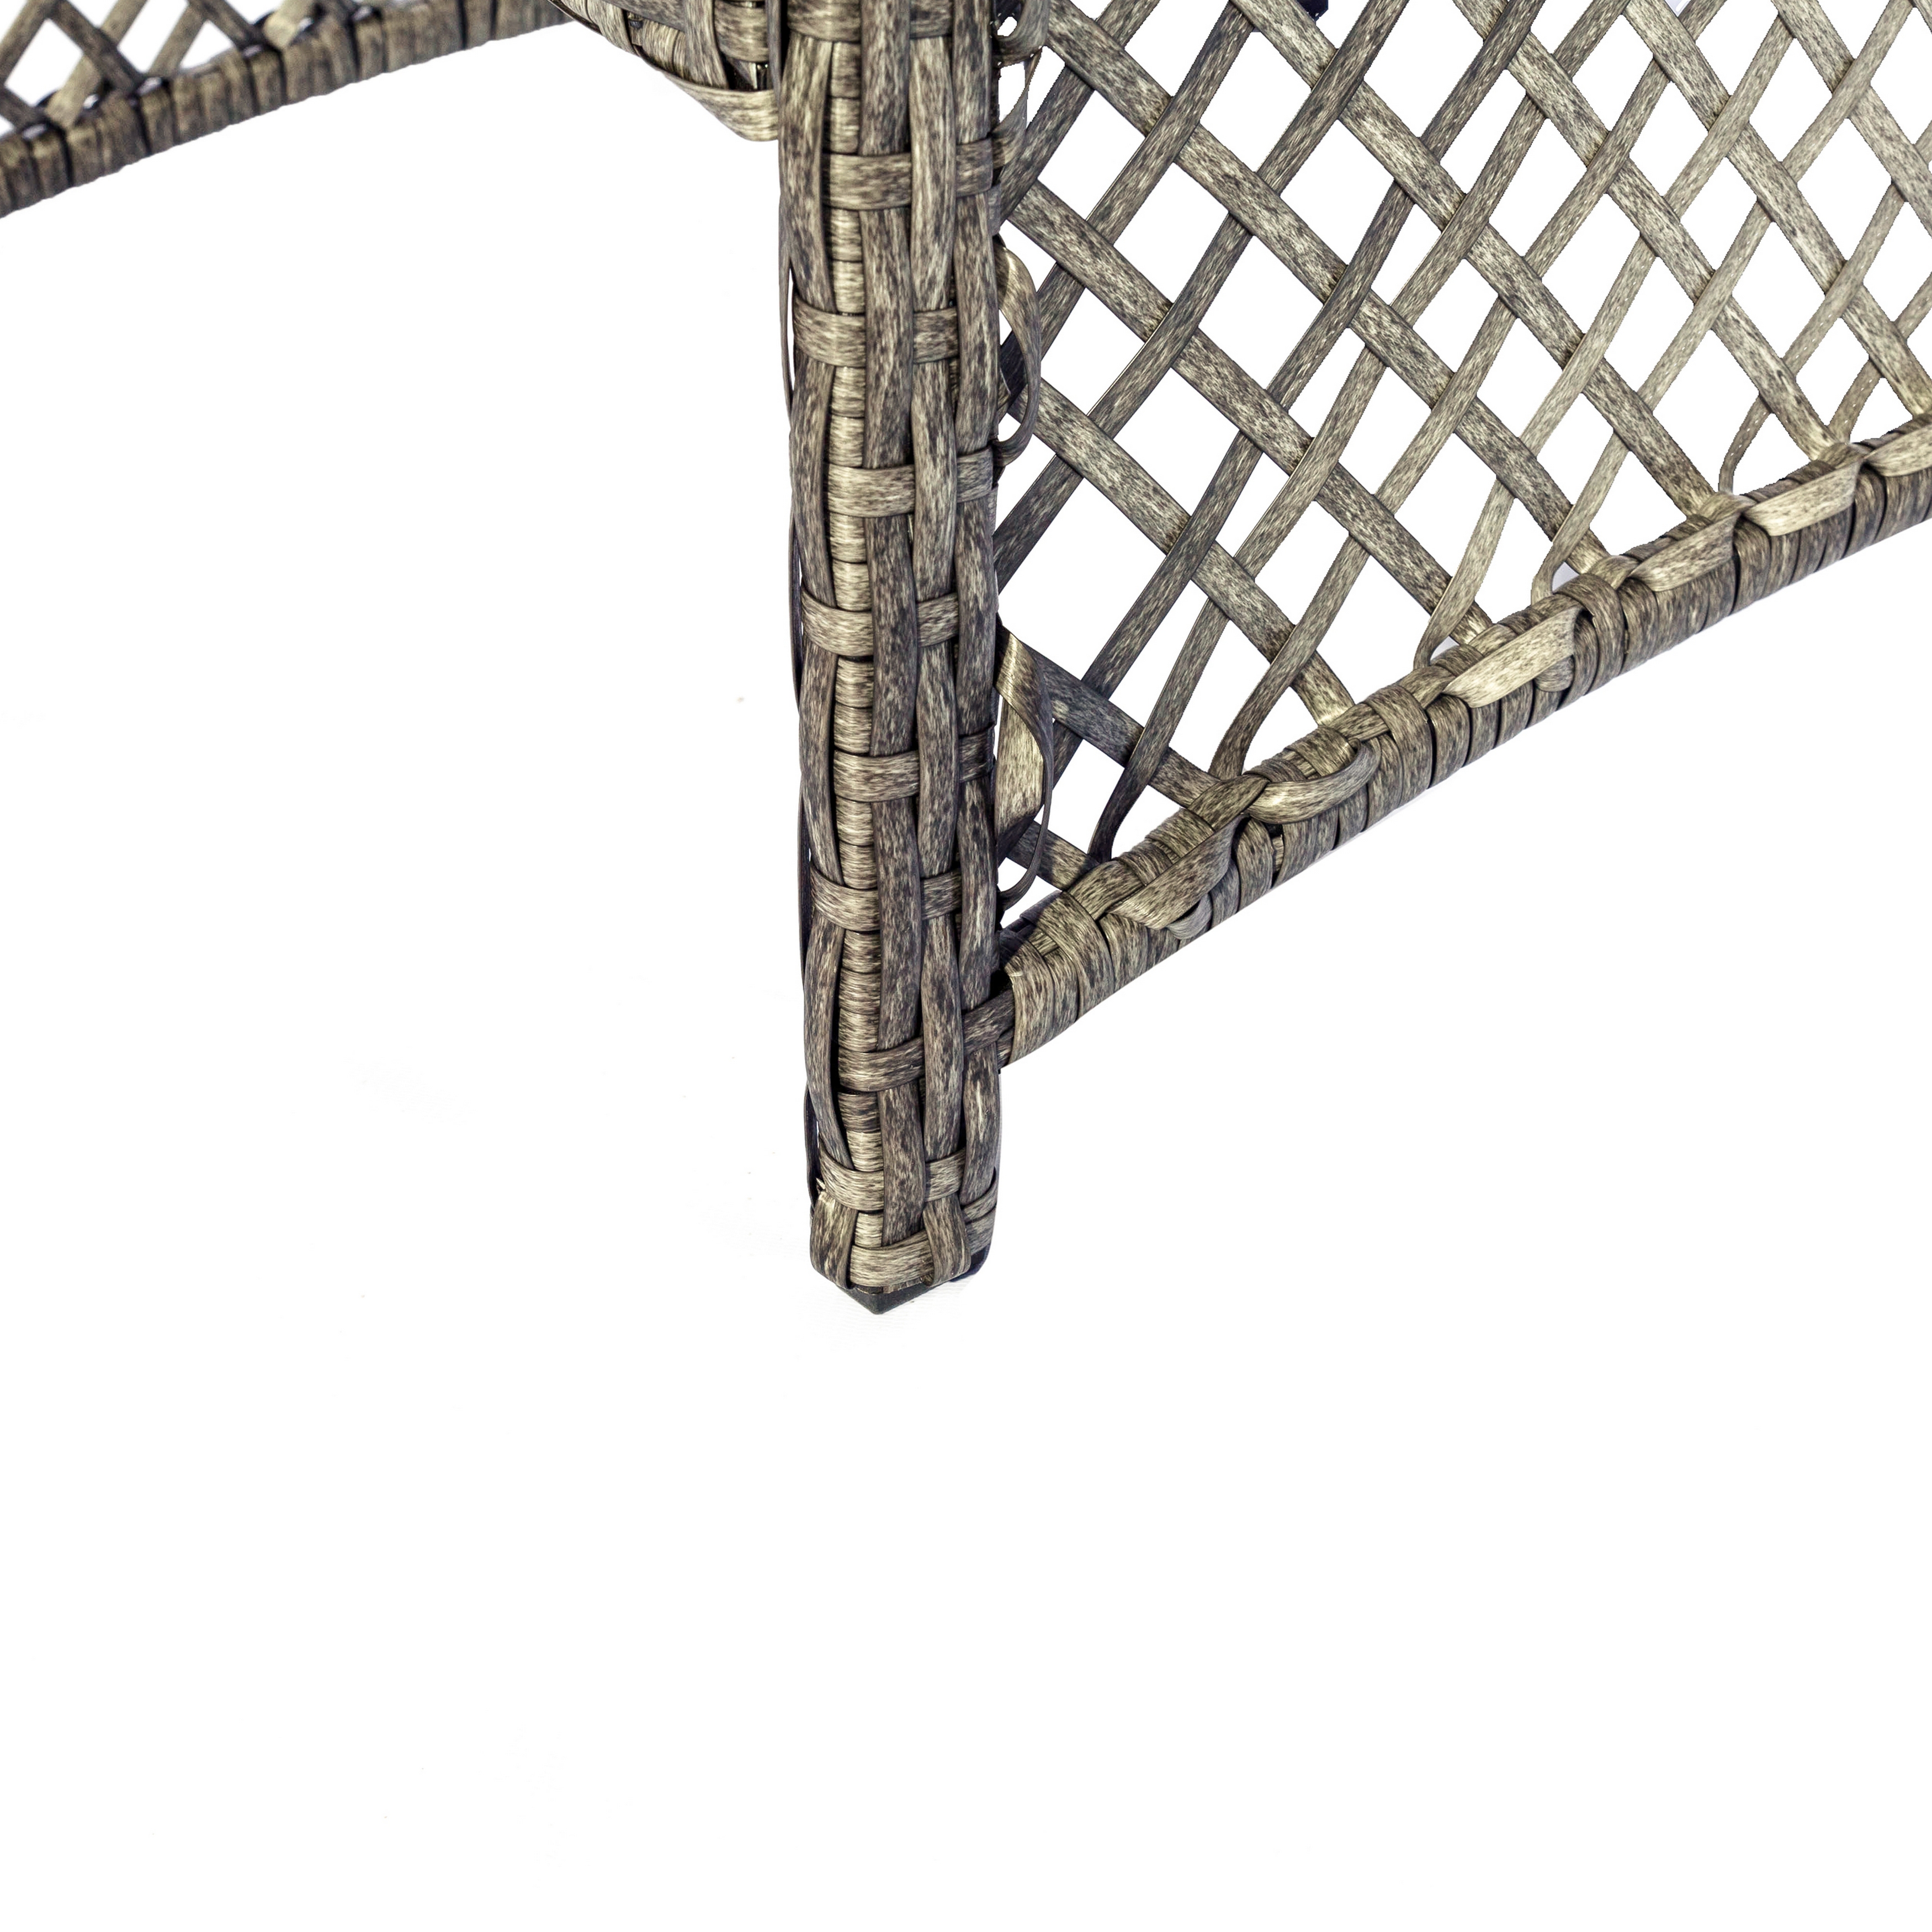 Morada 3-Piece Woven Rattan Wicker Seating Set, Navy - image 3 of 16